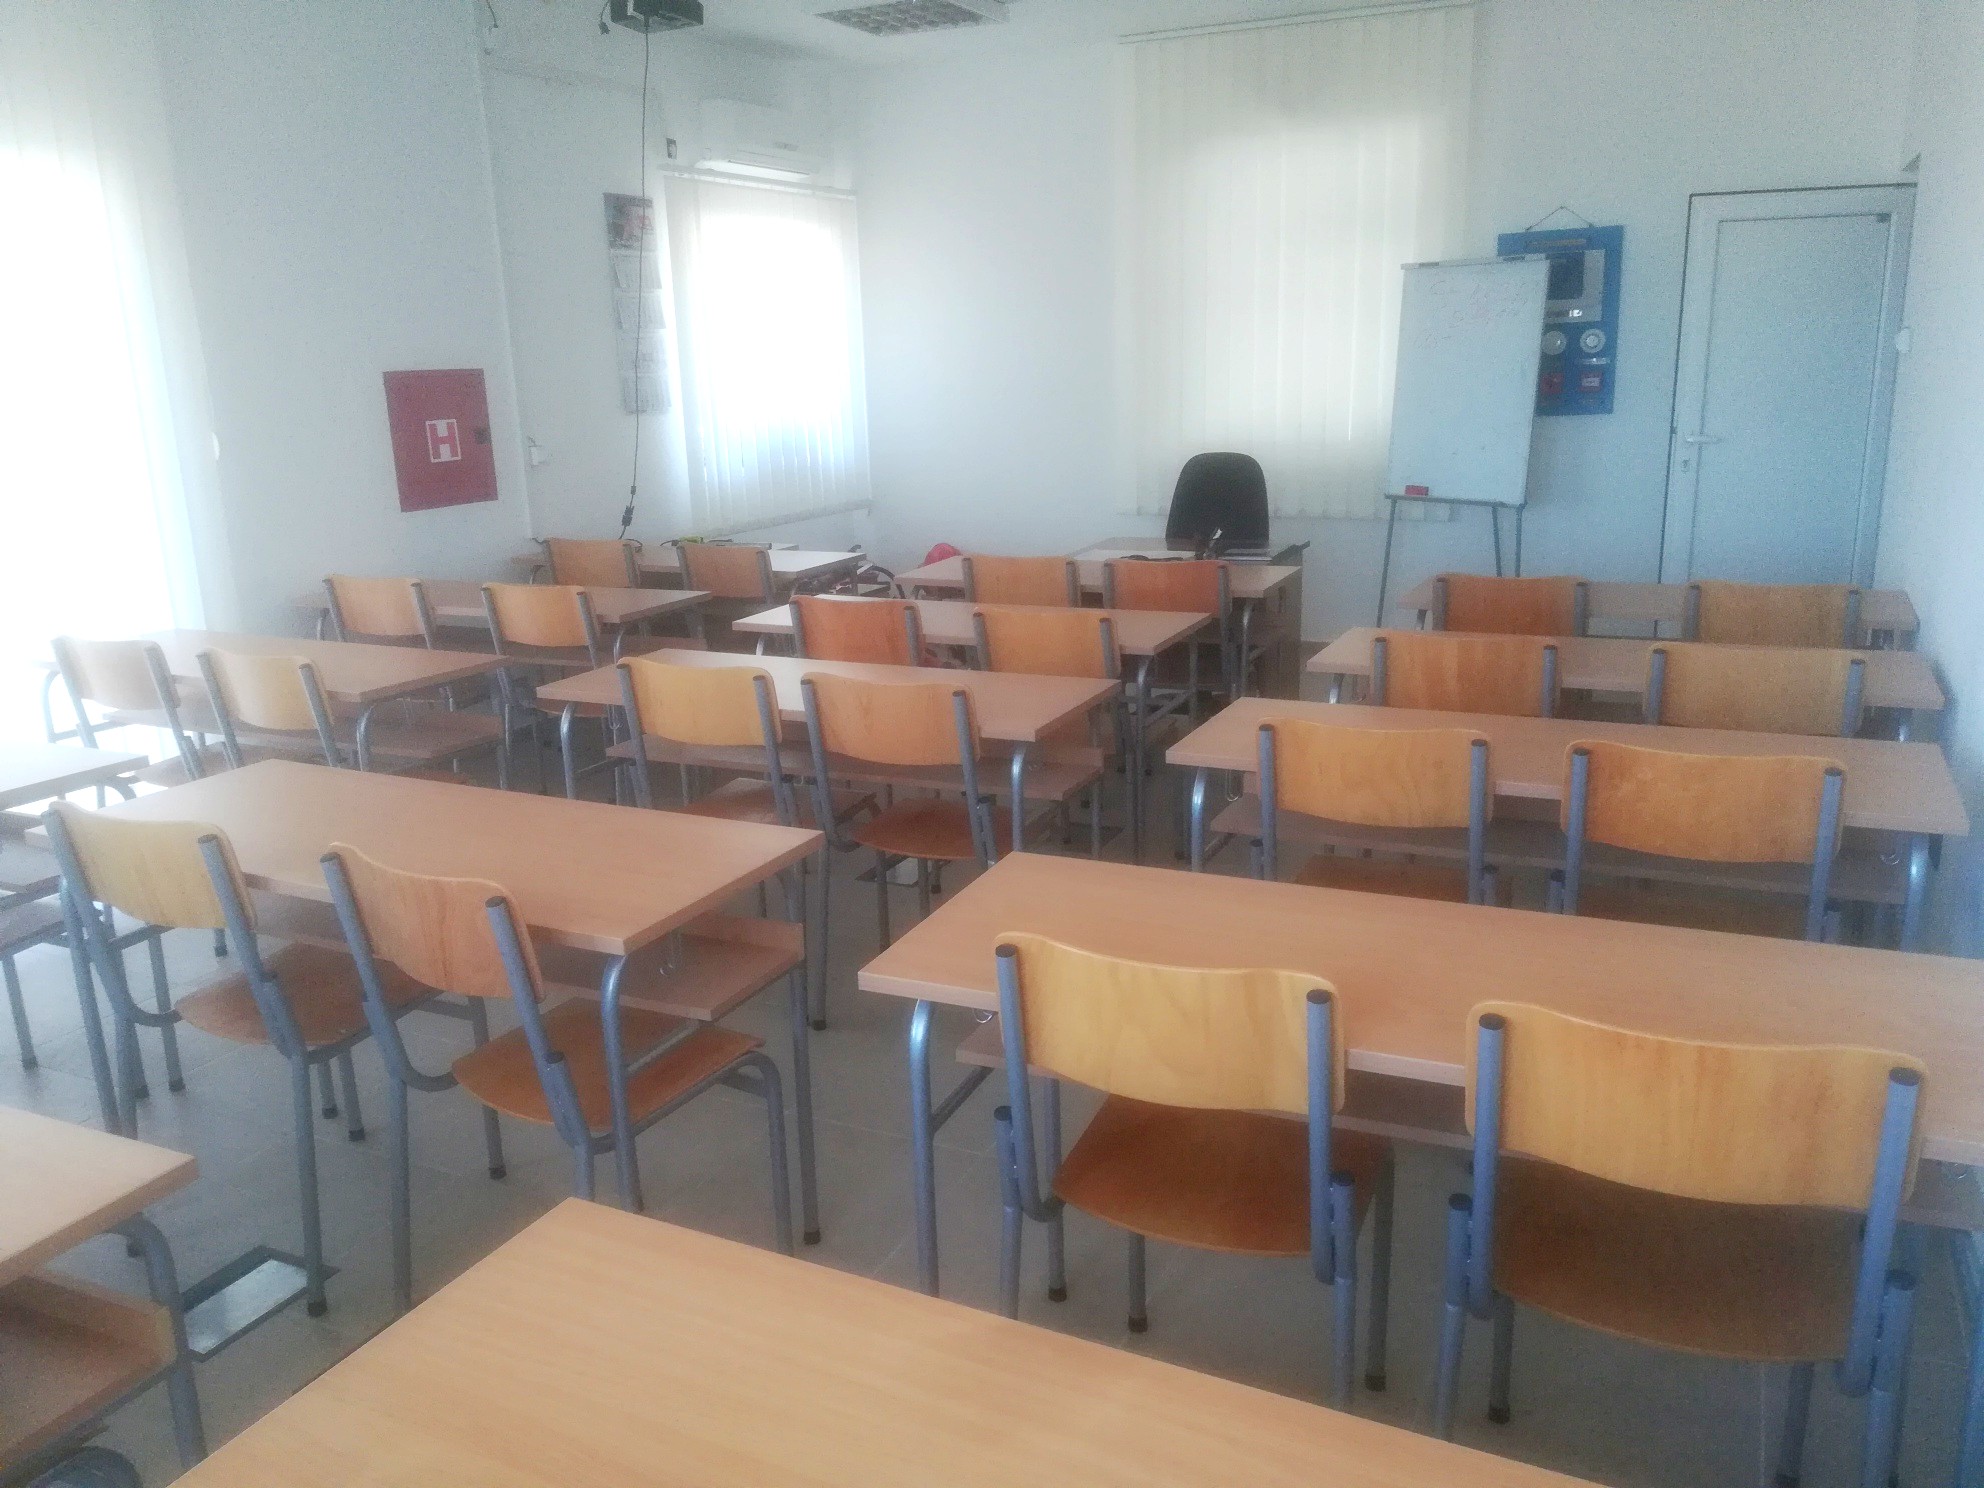 classroom inside building